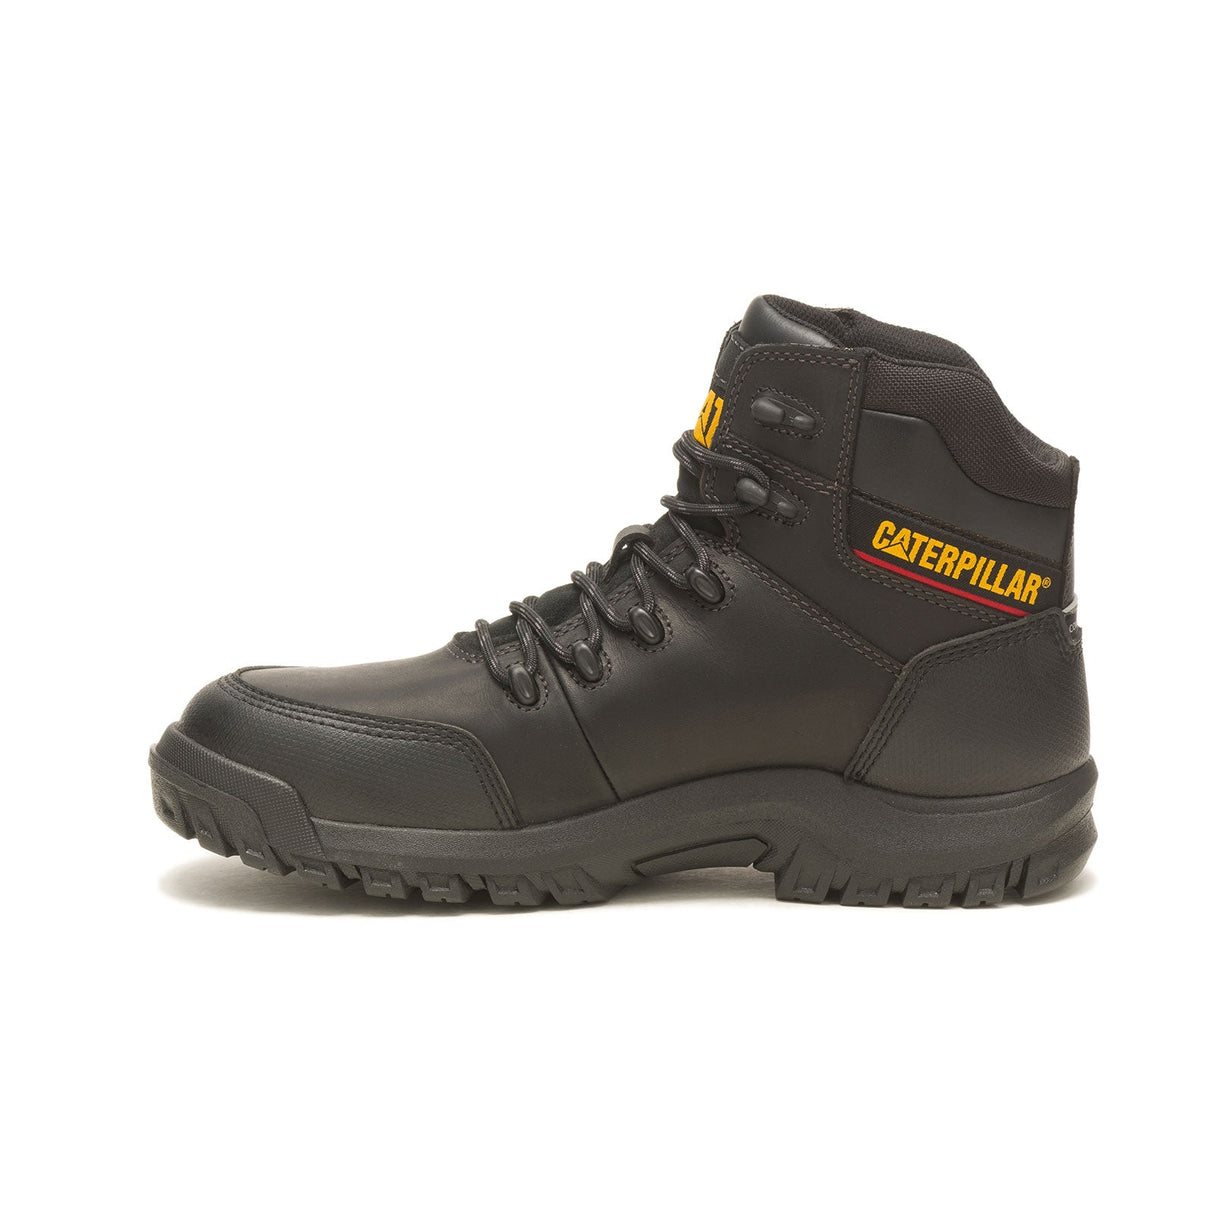 Caterpillar Resorption 2 8 Men's Composite-Toe Work Boots Wp P90976-4